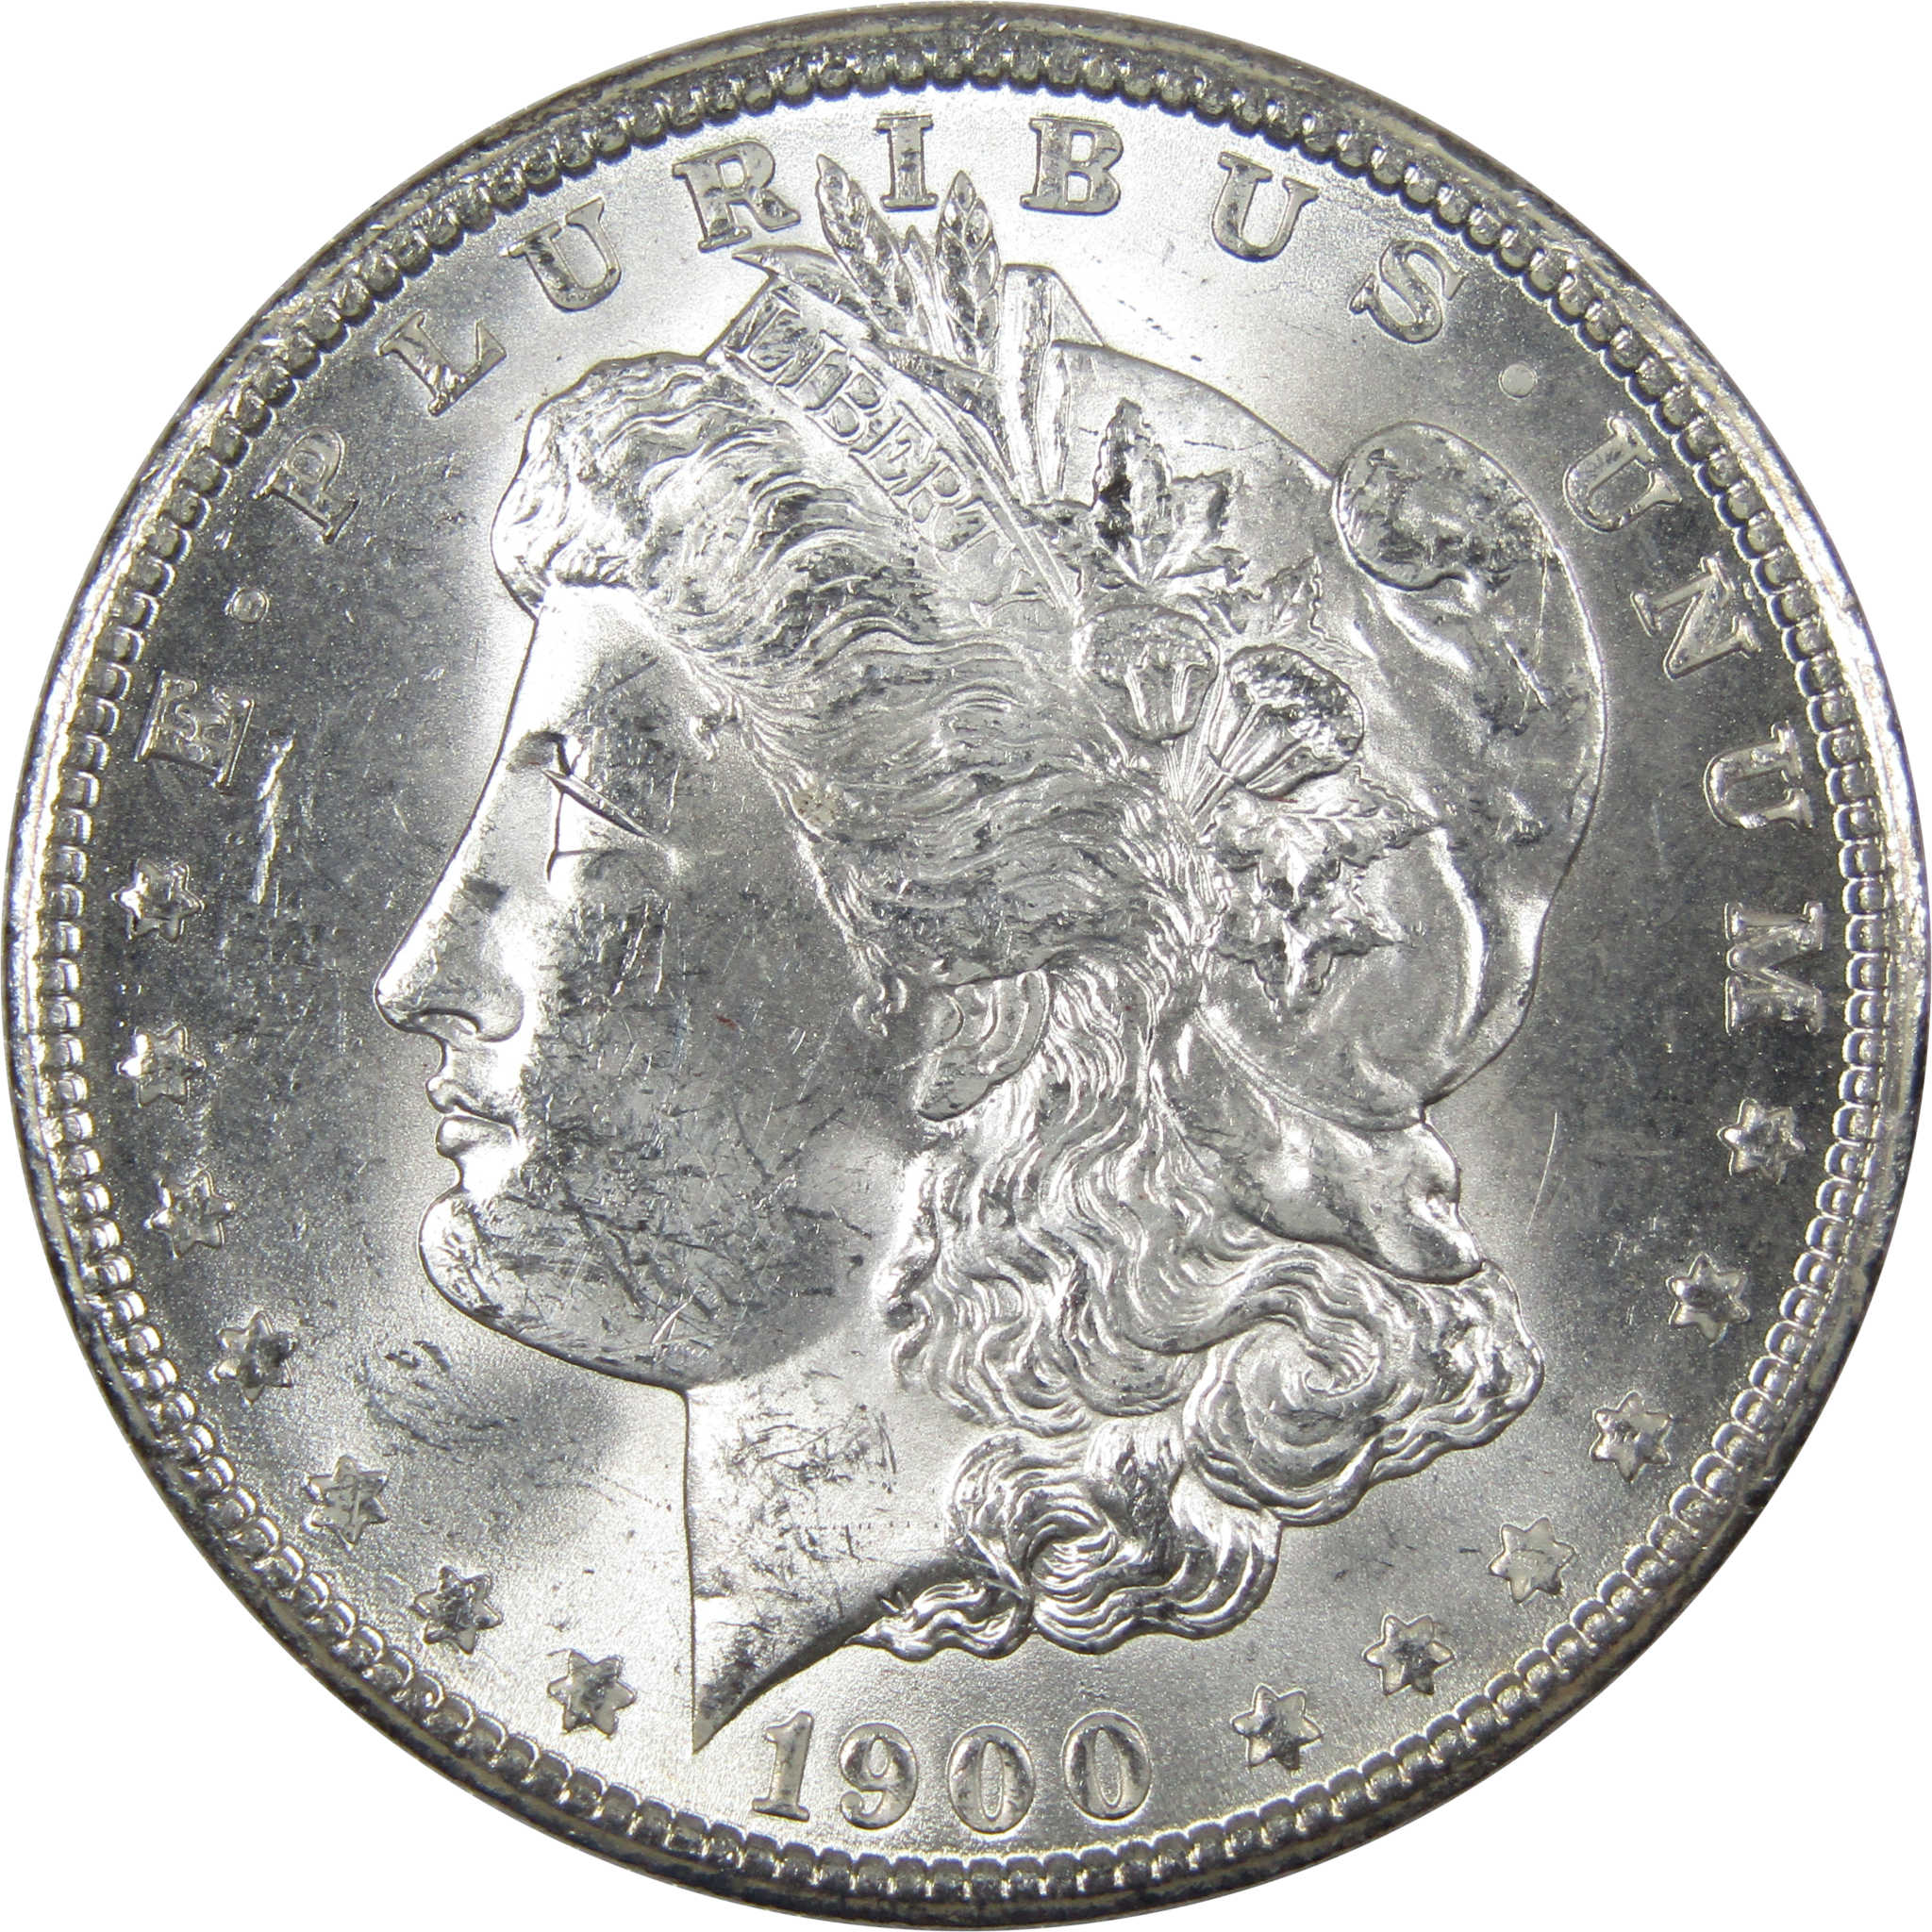 1900 O Morgan Dollar BU Uncirculated Mint State 90% Silver SKU:IPC9757 - Morgan coin - Morgan silver dollar - Morgan silver dollar for sale - Profile Coins &amp; Collectibles